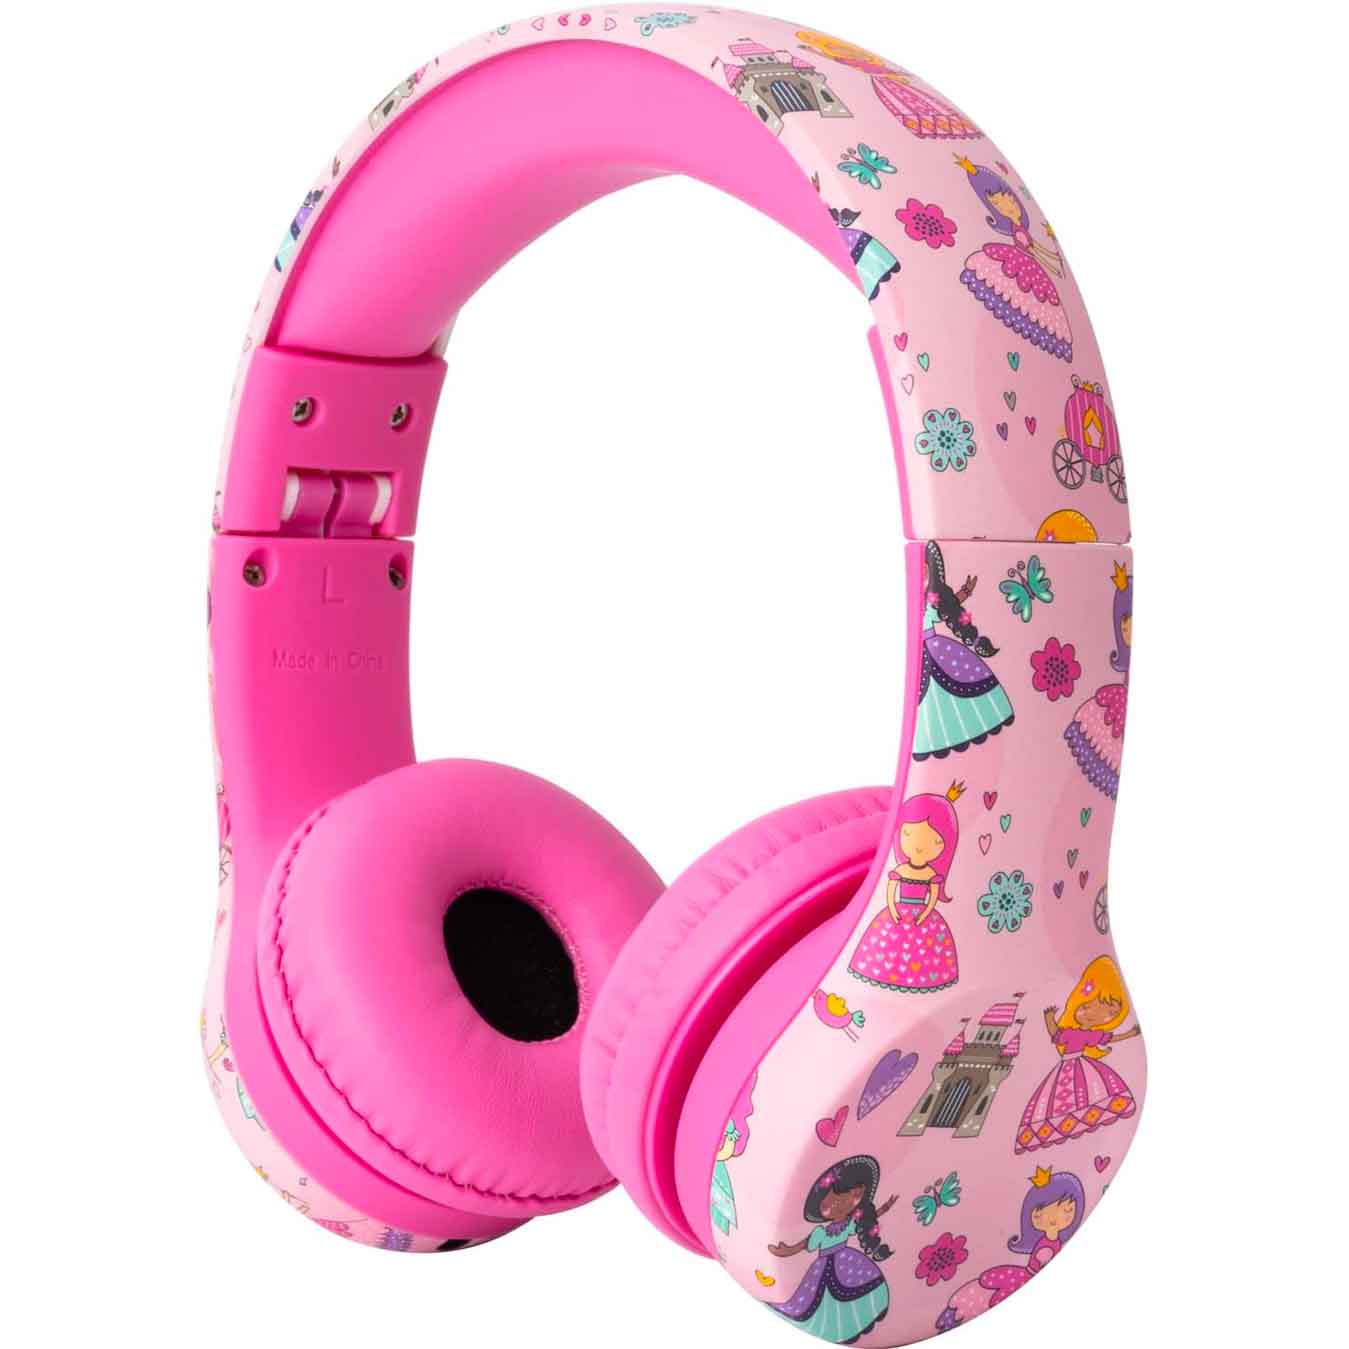 pink kids headphones with princess pattern